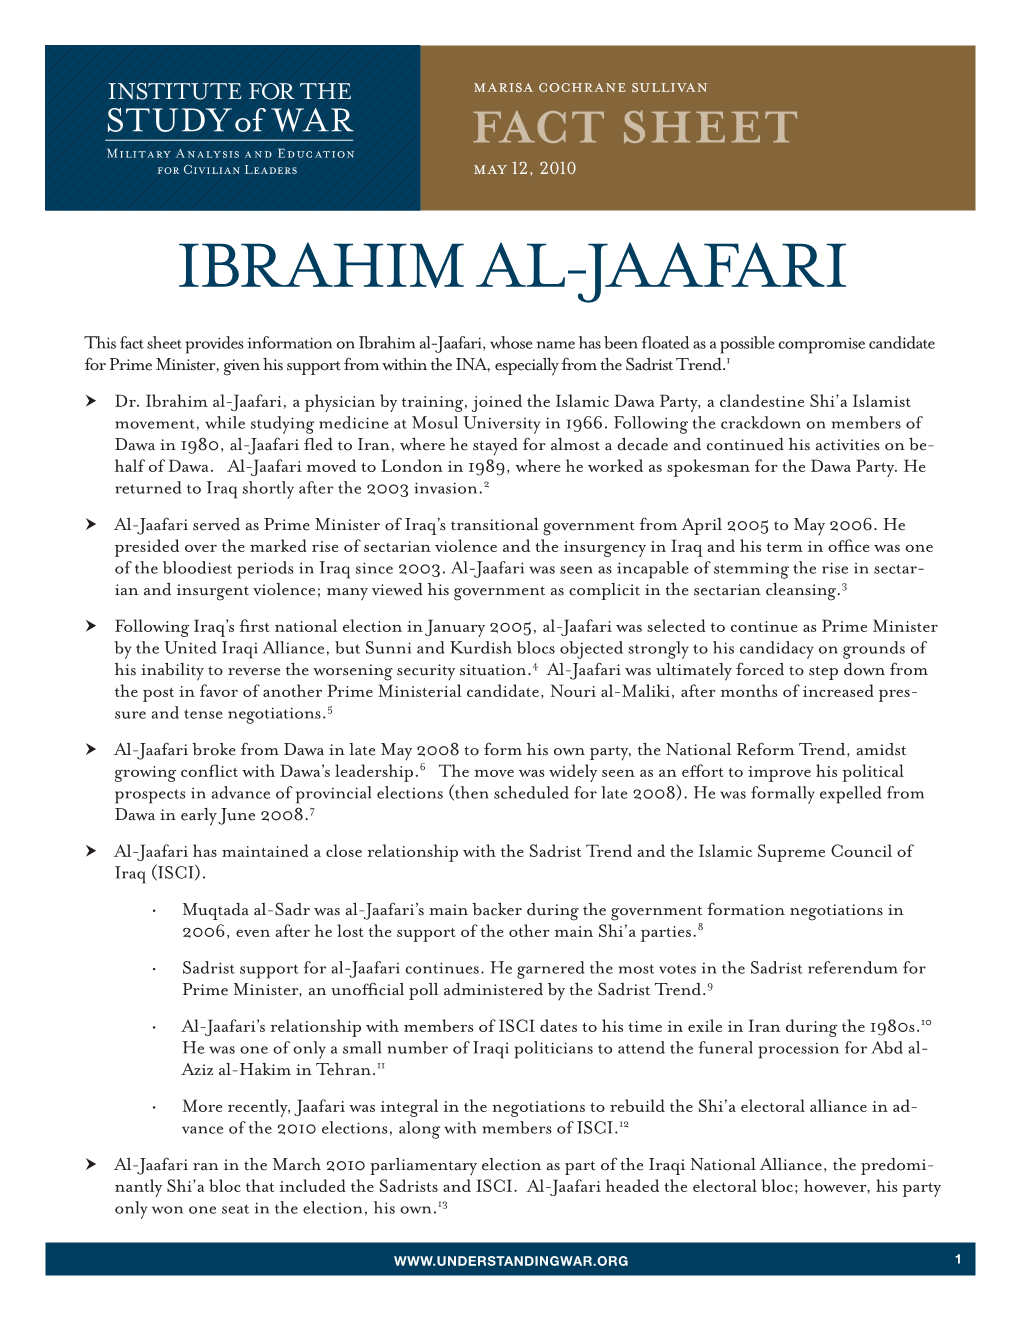 Download the Jaafari Fact Sheet